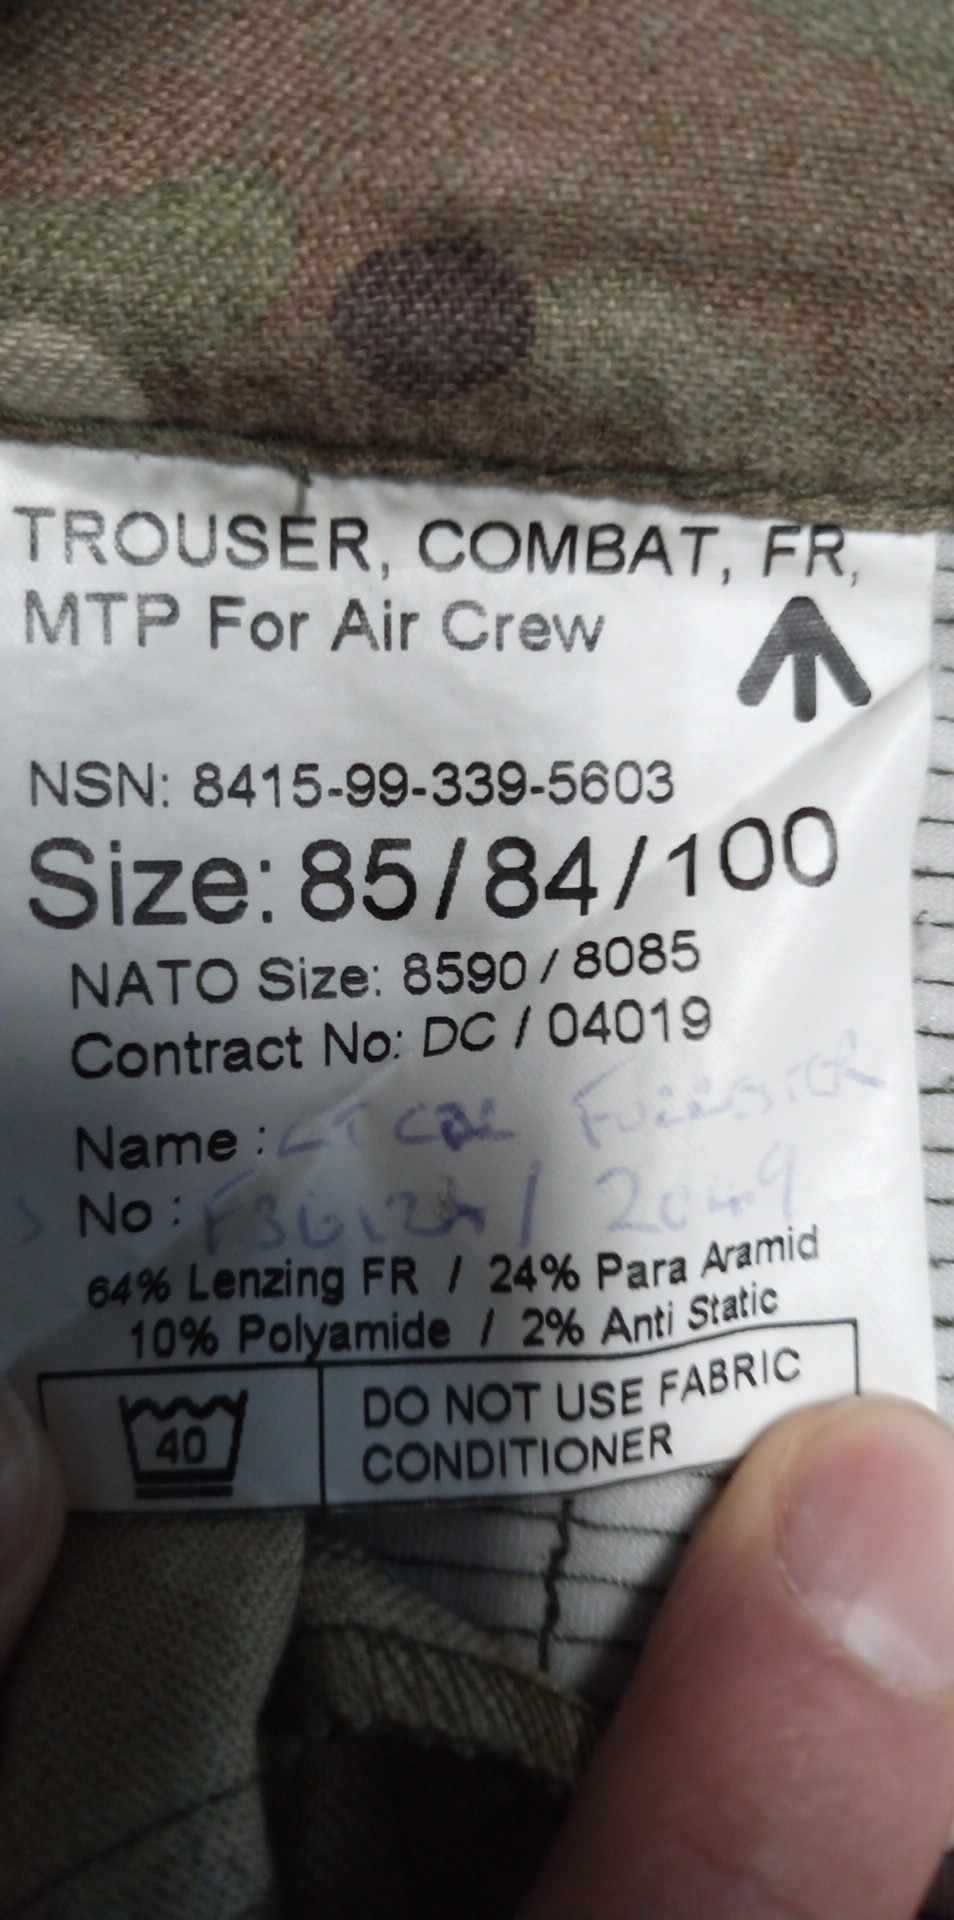 Spodnie UK Army Torusers Combat FR MTP For Air Crew r85/84/100 pas84#1